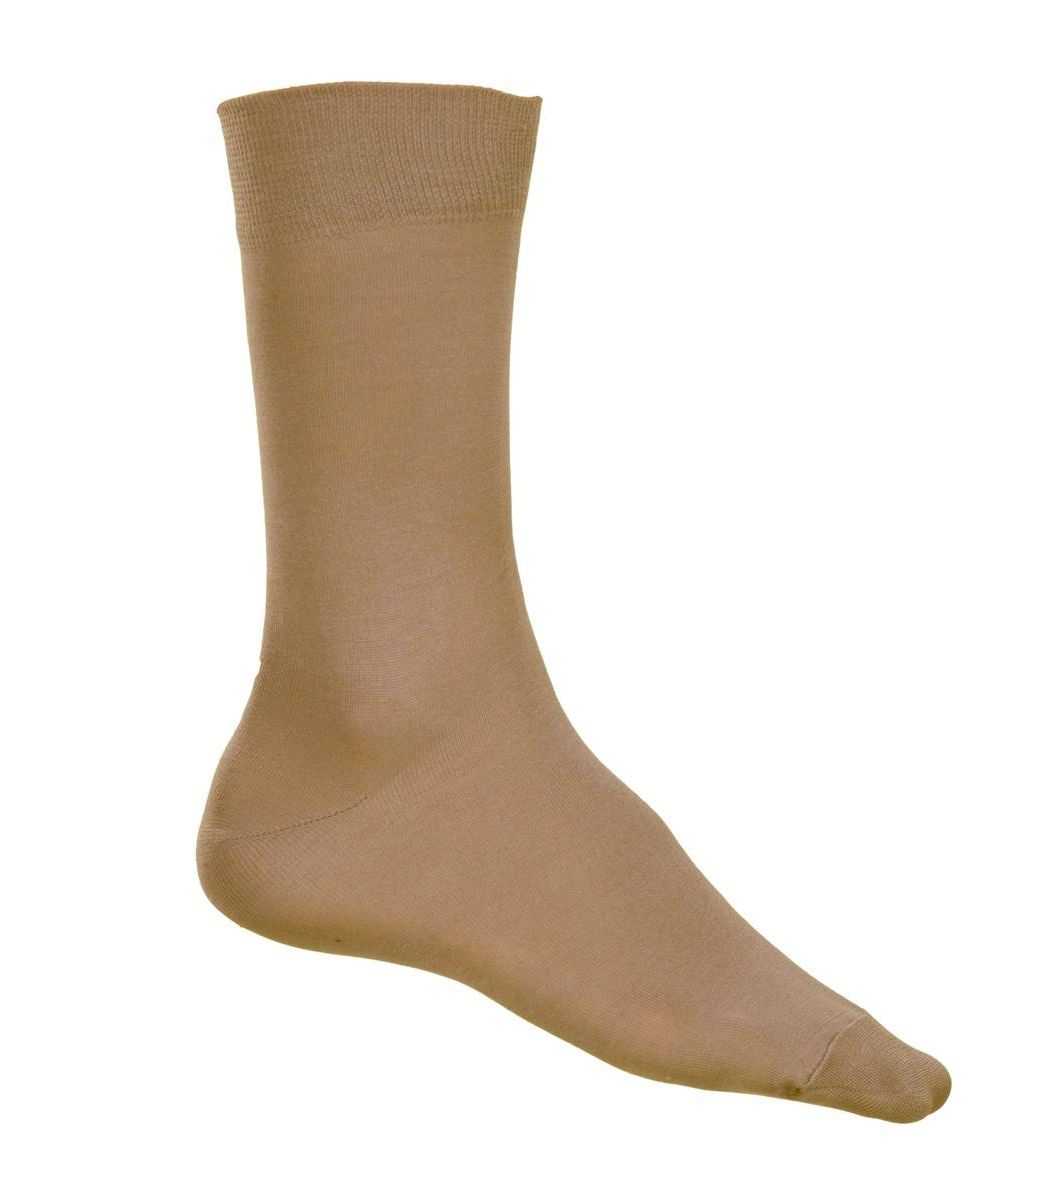  Socks Lord Offers Cotton Socks, brown 7051-2